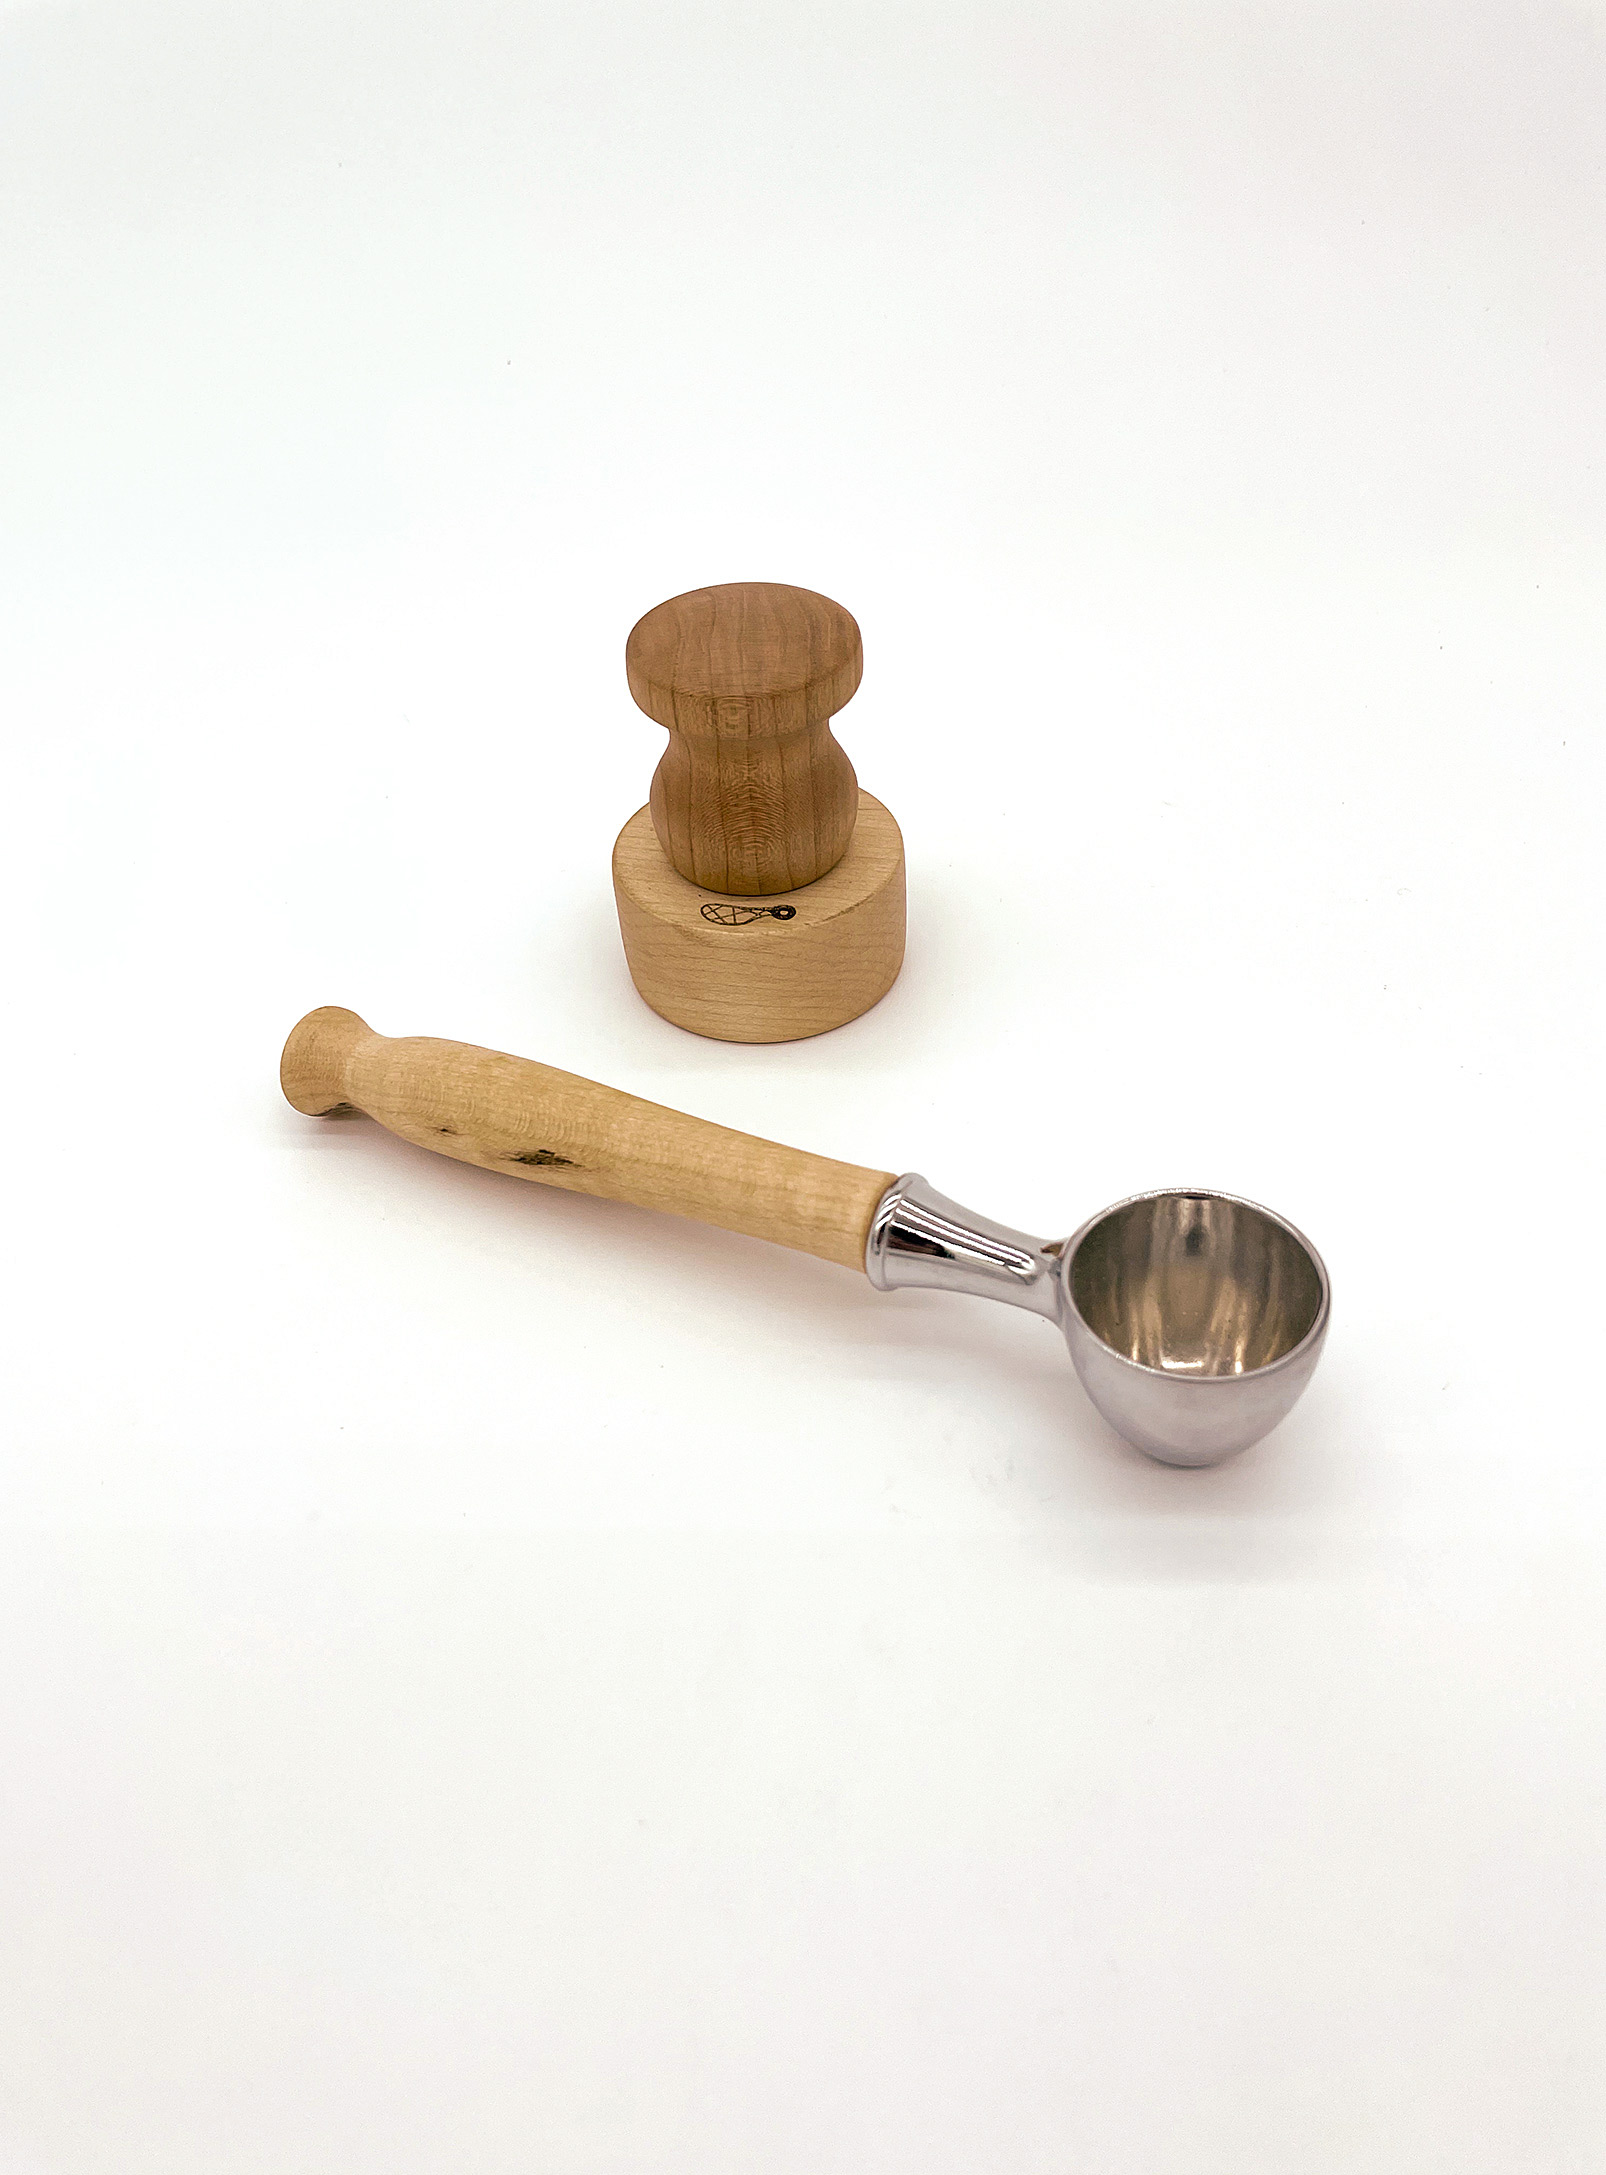 Gabriel Perreault - Coffee press and spoon set